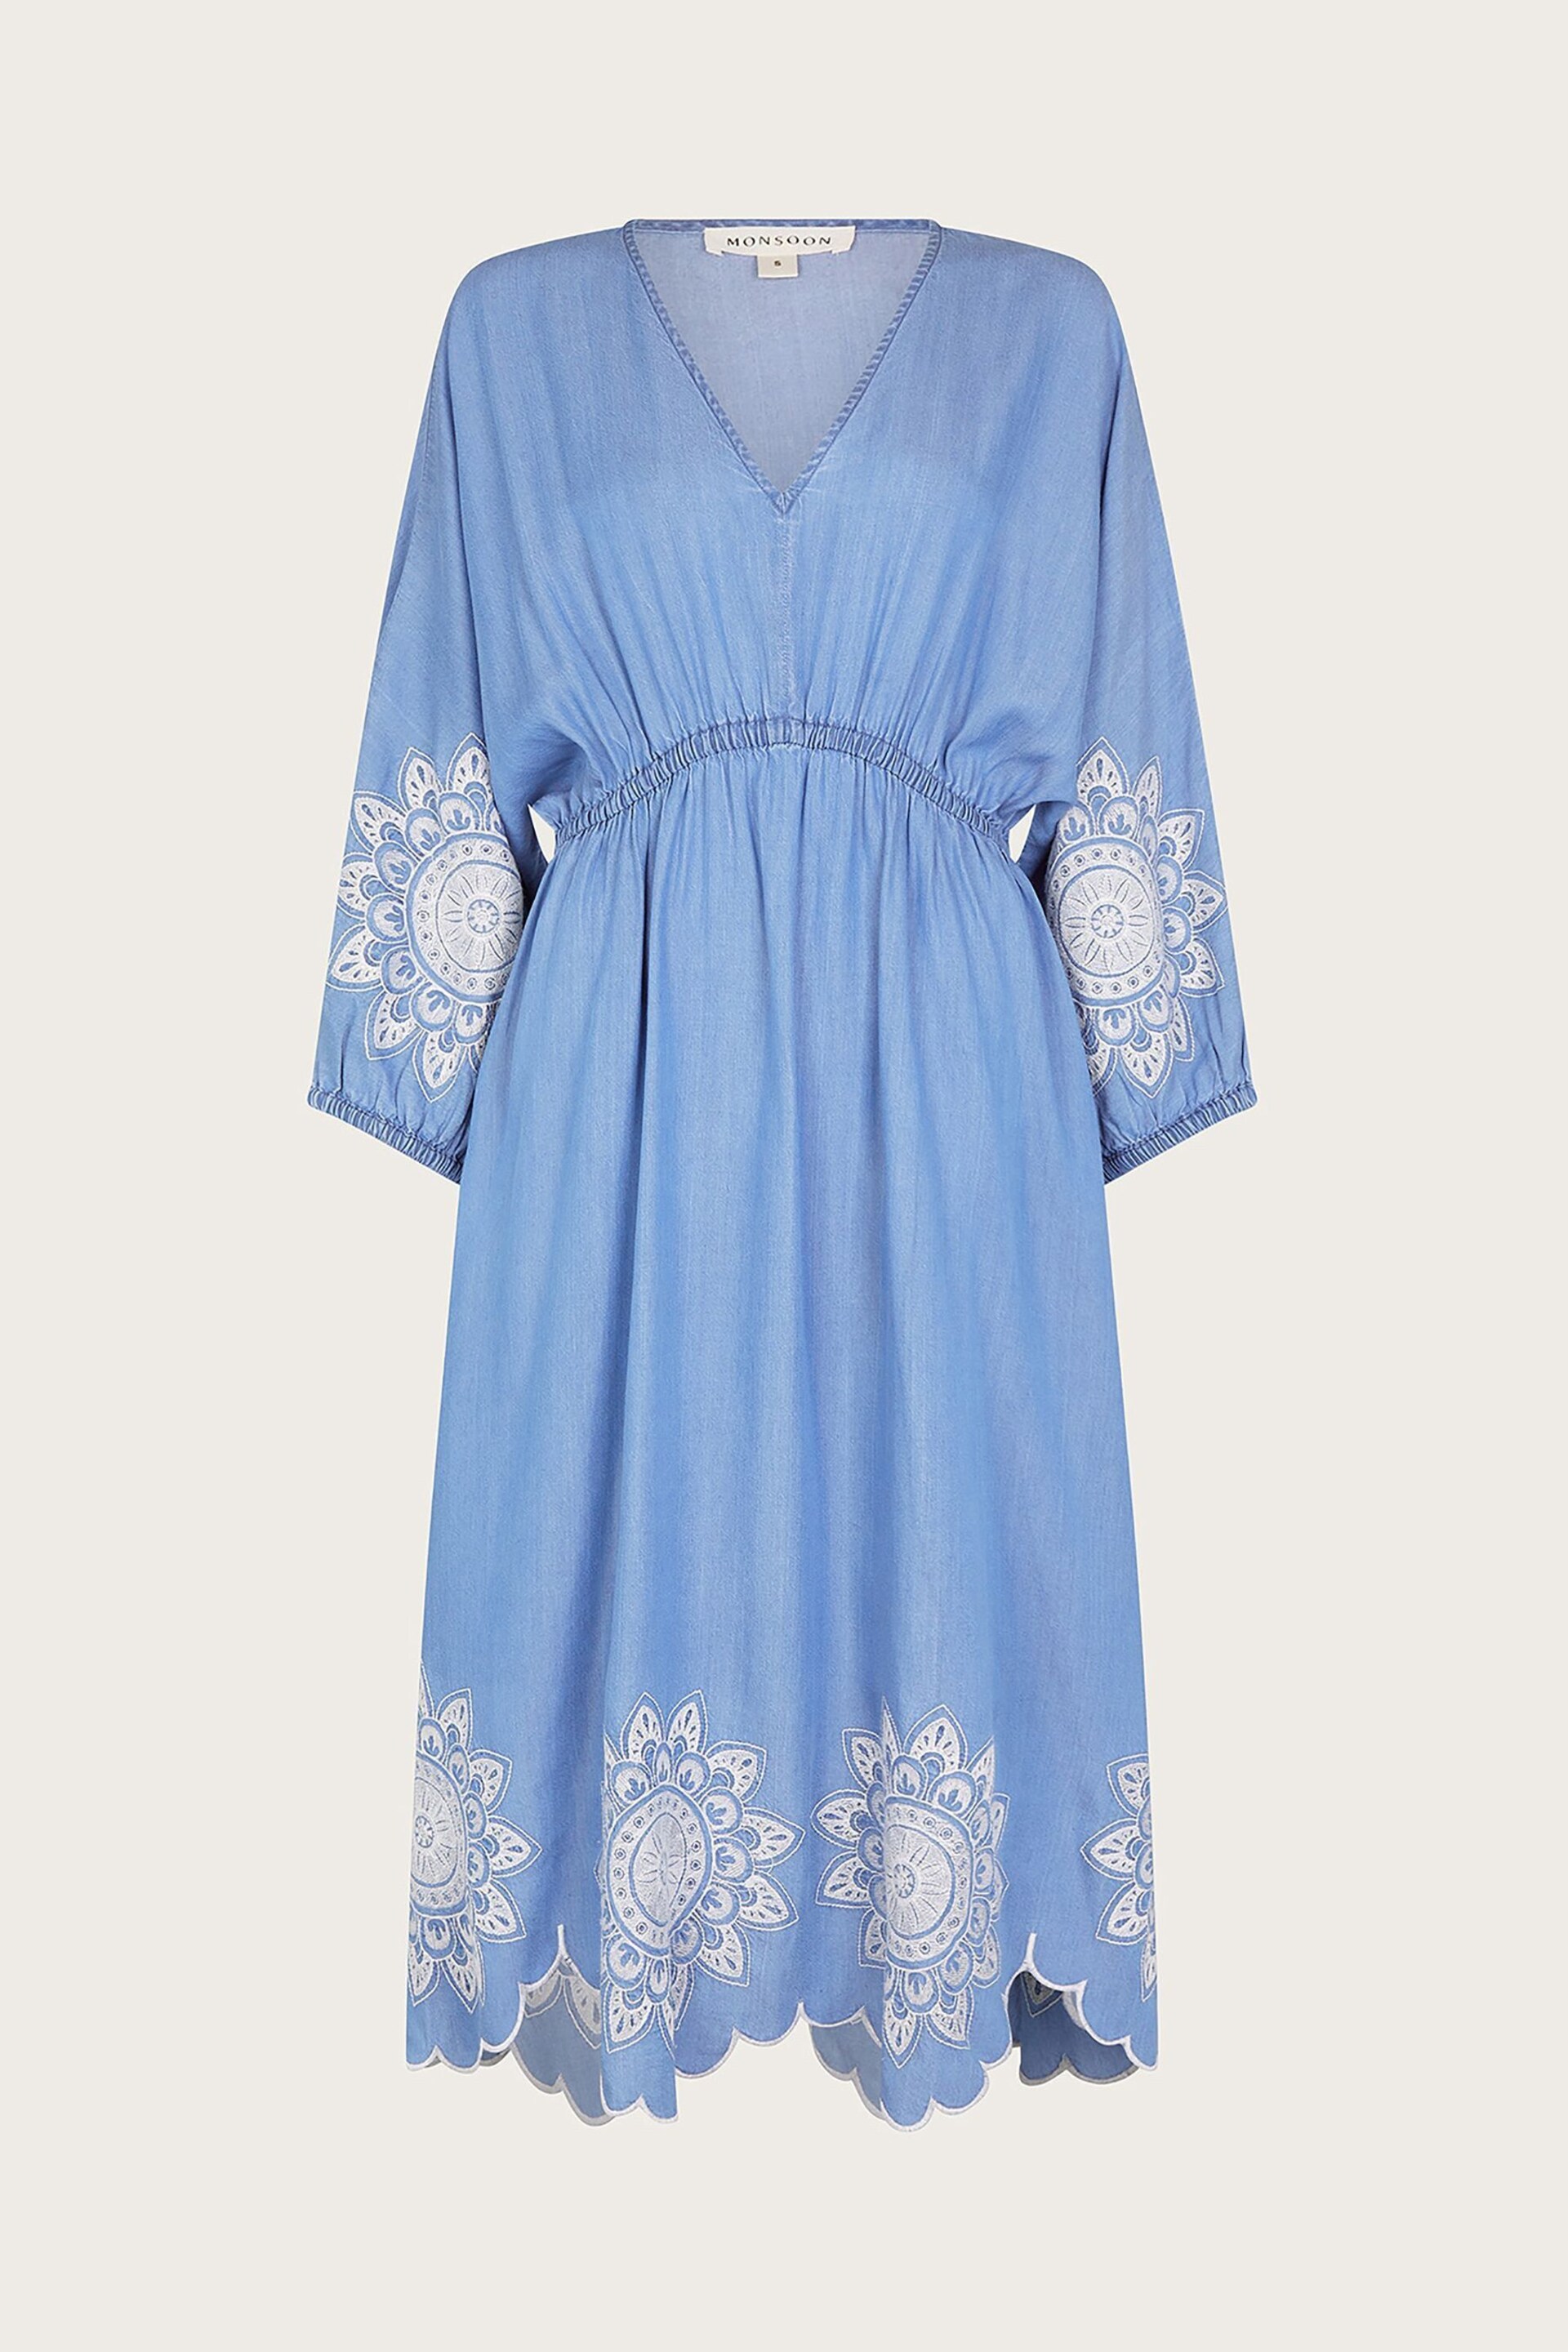 Monsoon Blue Tabitha Embroidered Denim Dress - Image 5 of 5